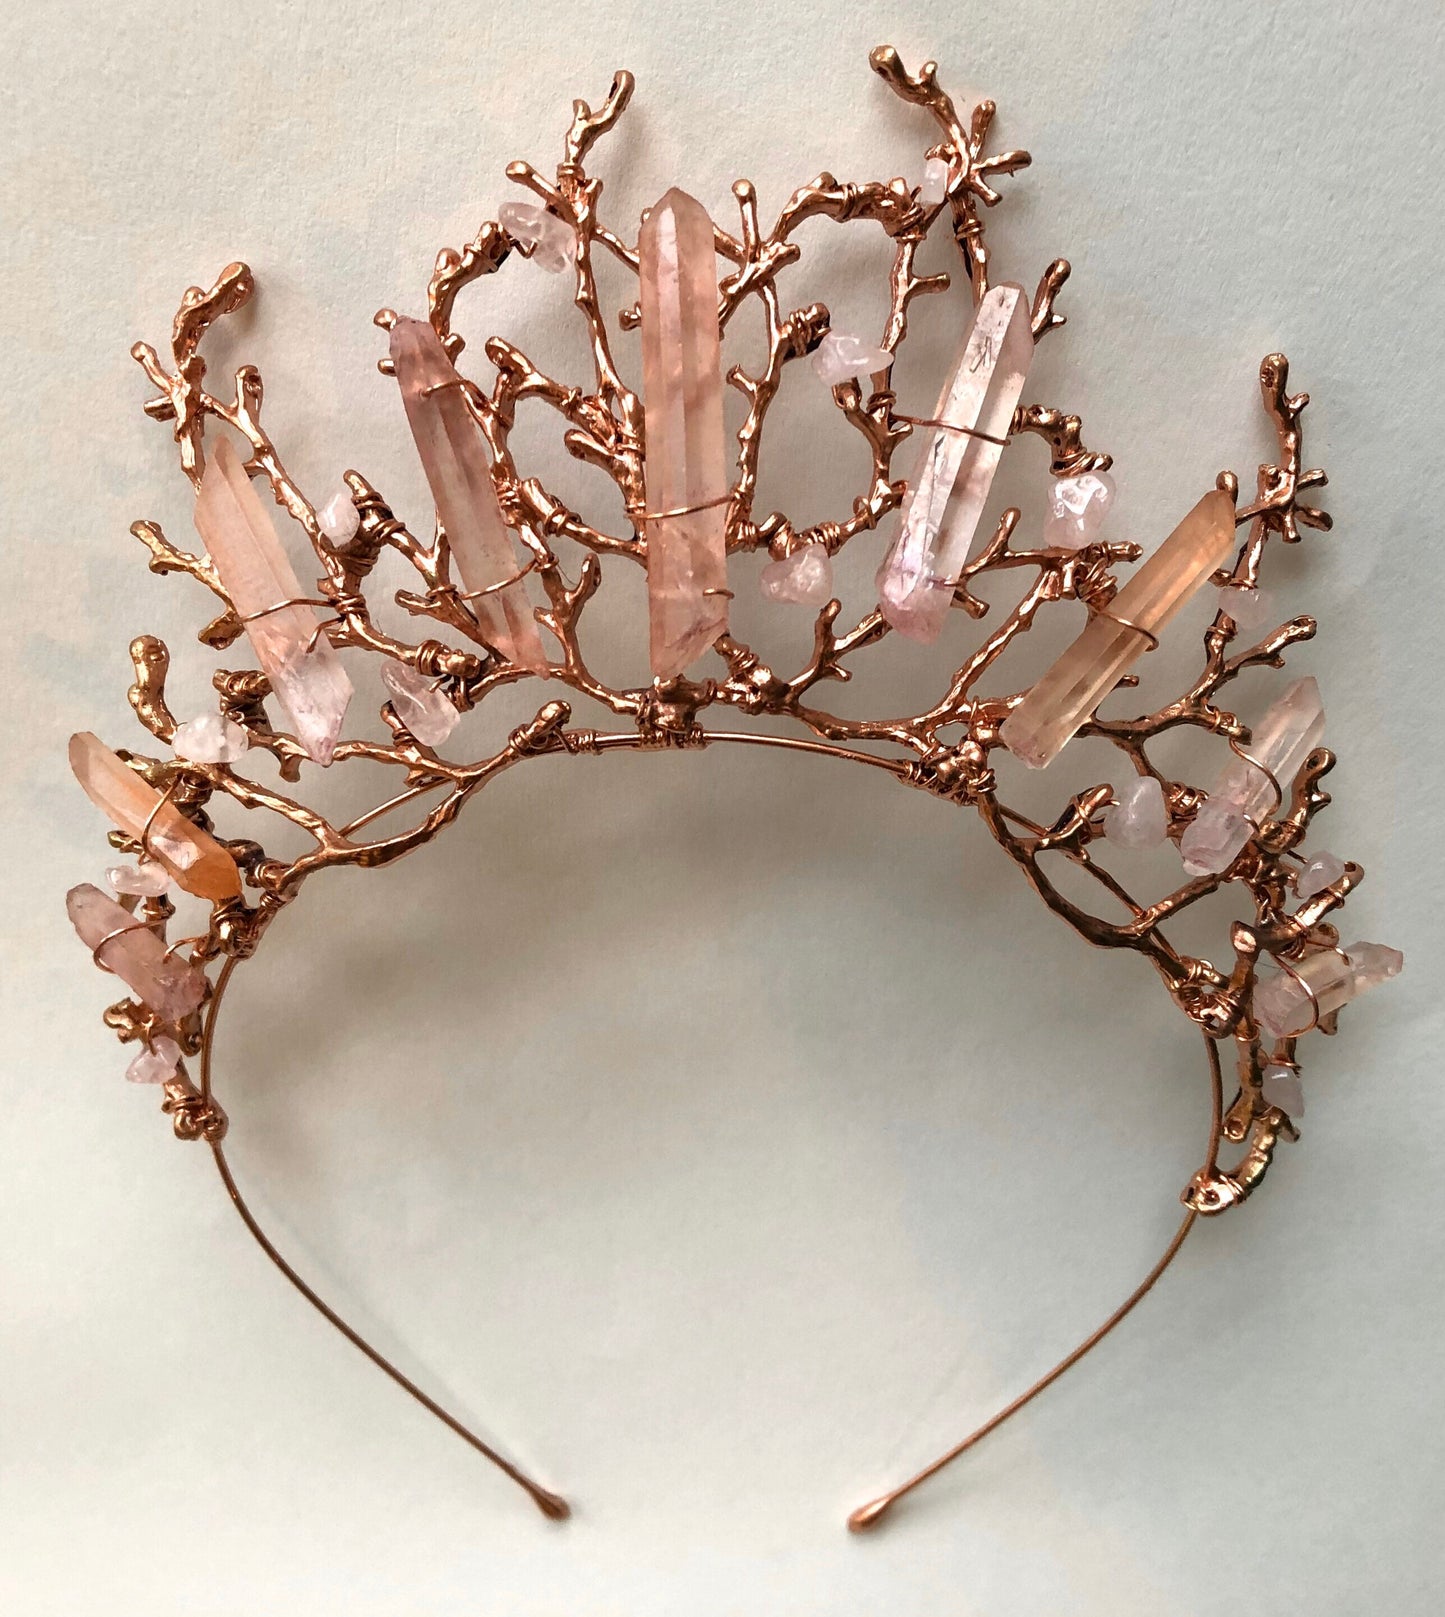 The ADA Crystal Twig Crown